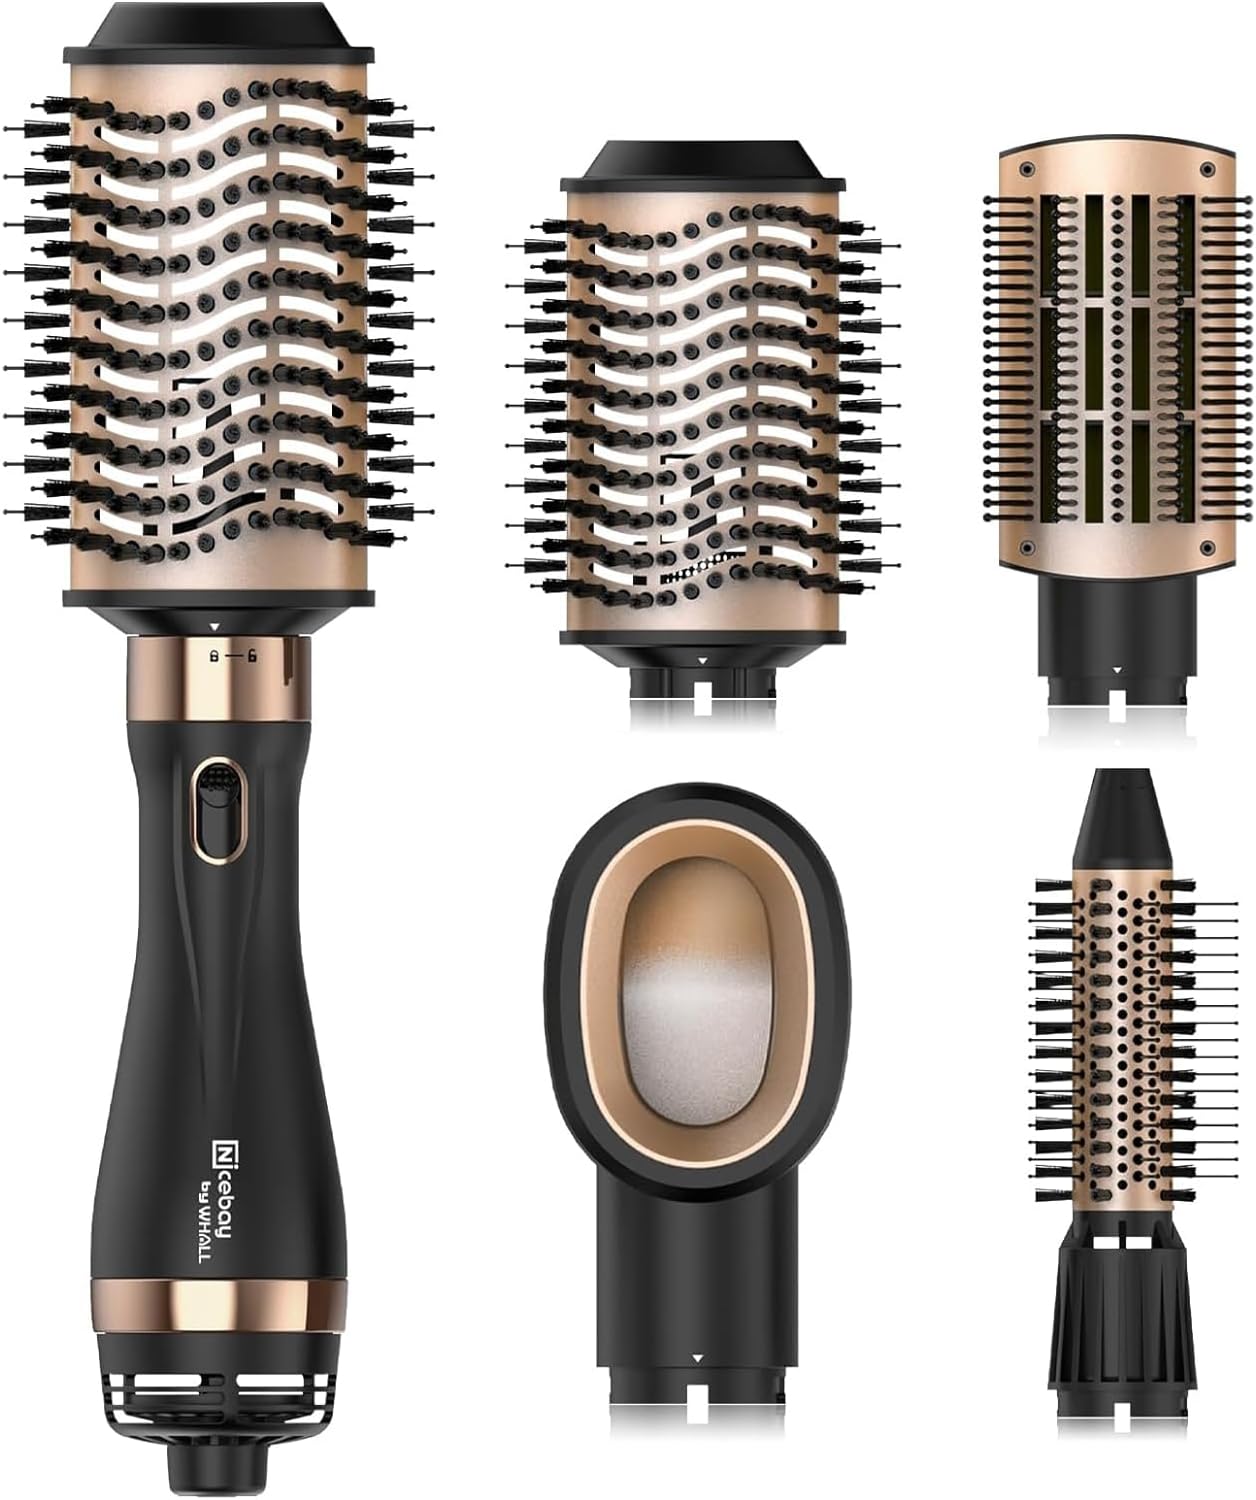 Nicebay®CT-536 Hair Dryer Brush Blow Dryer Brush in One, Hot Air Brush Set for Straightening/Drying/Curling, Oval Brush, Multi-Temperature Settings, Detachable Design for Women